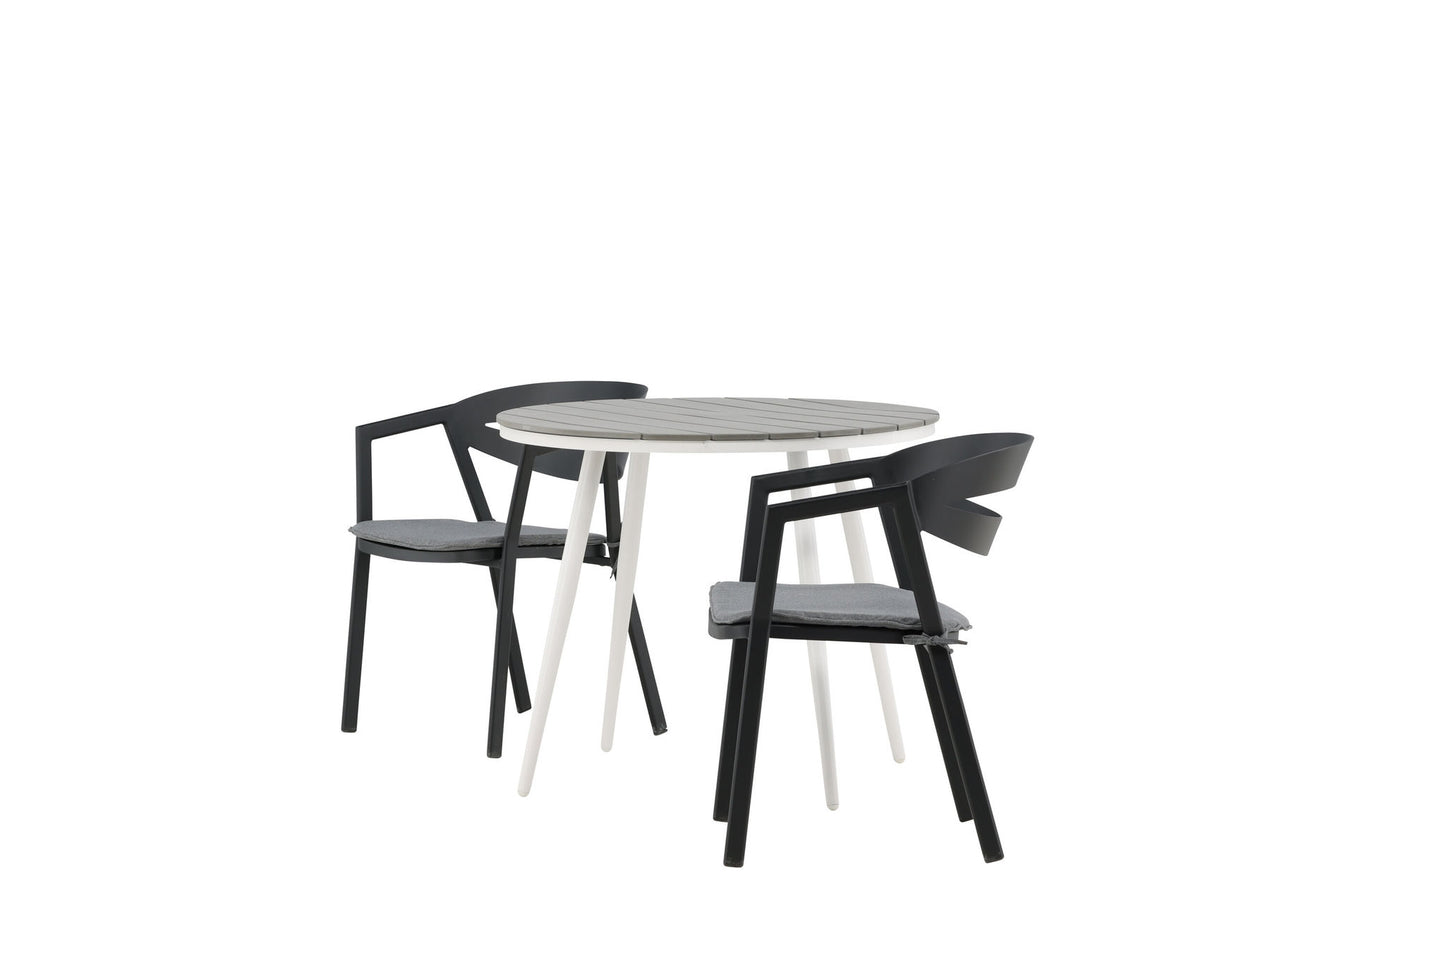 Break - Spisebord, Rundt - Hvid / Grå - Alu / Nonwood - 90ø Slit - Spisebordsstol inkl. hynde - Sort /Grå - Aluminium -